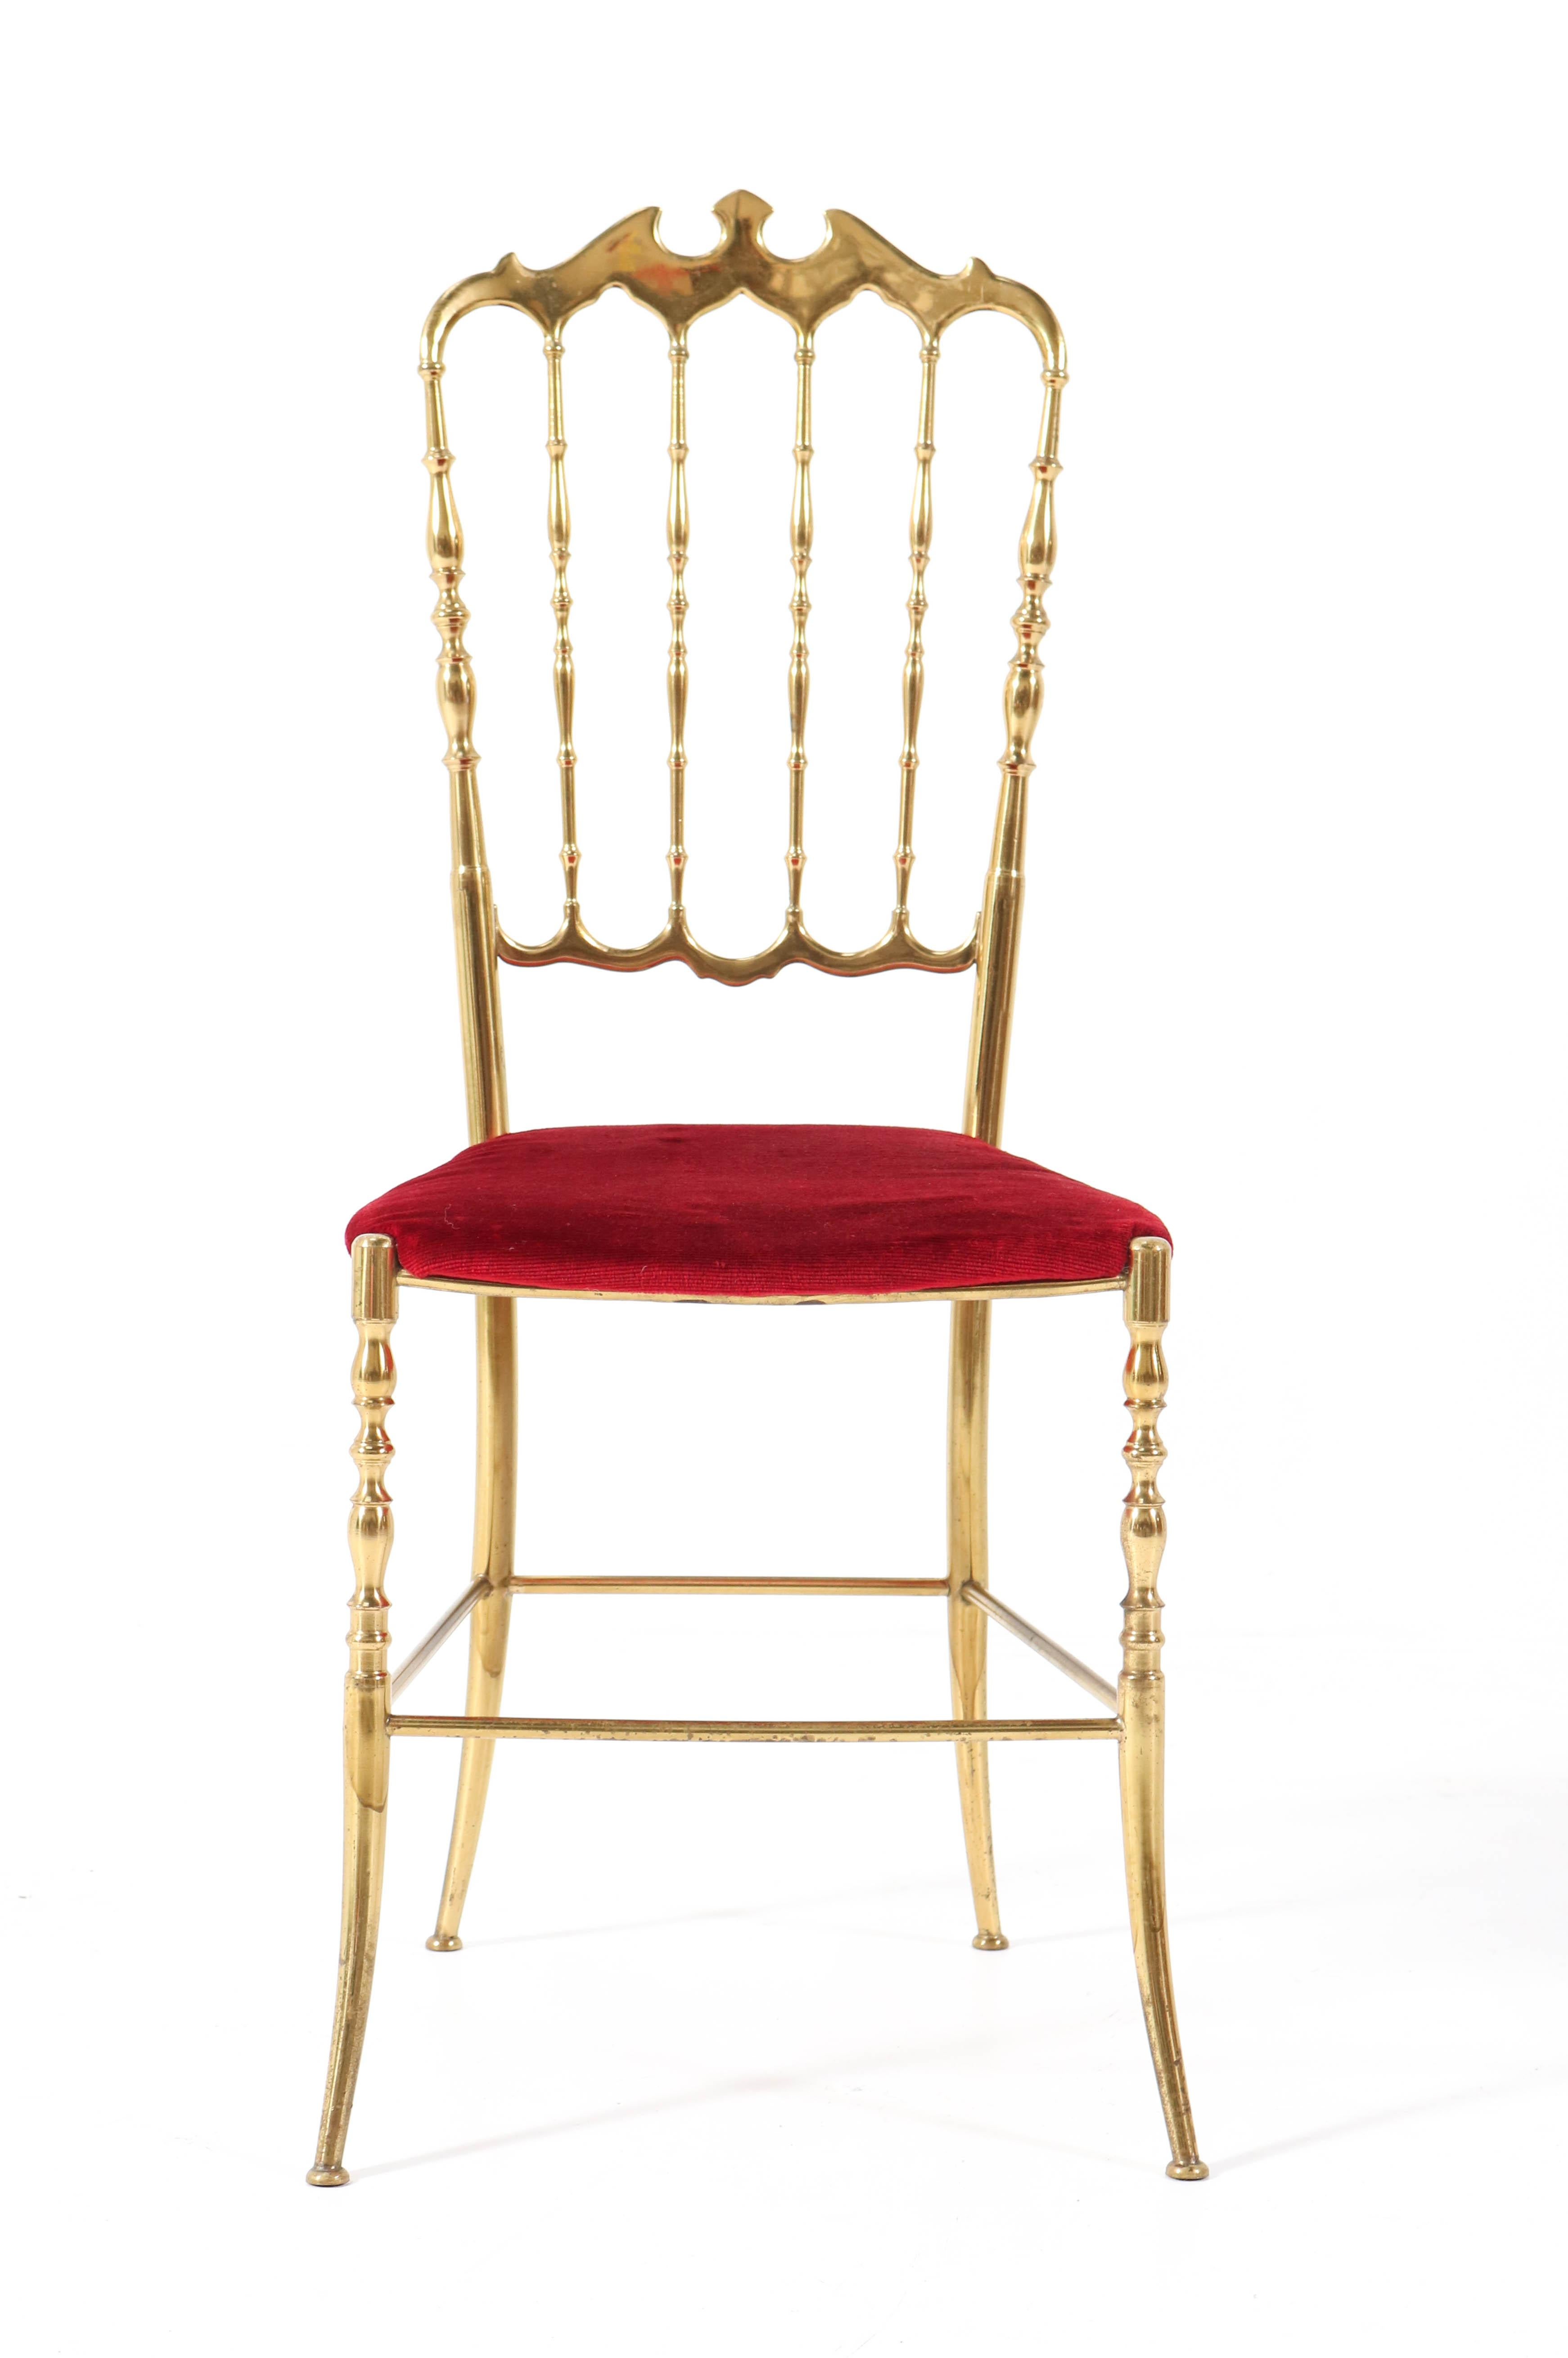 Mid-20th Century Brass Italian Mid-Century Modern Chair by Chiavari, 1960s